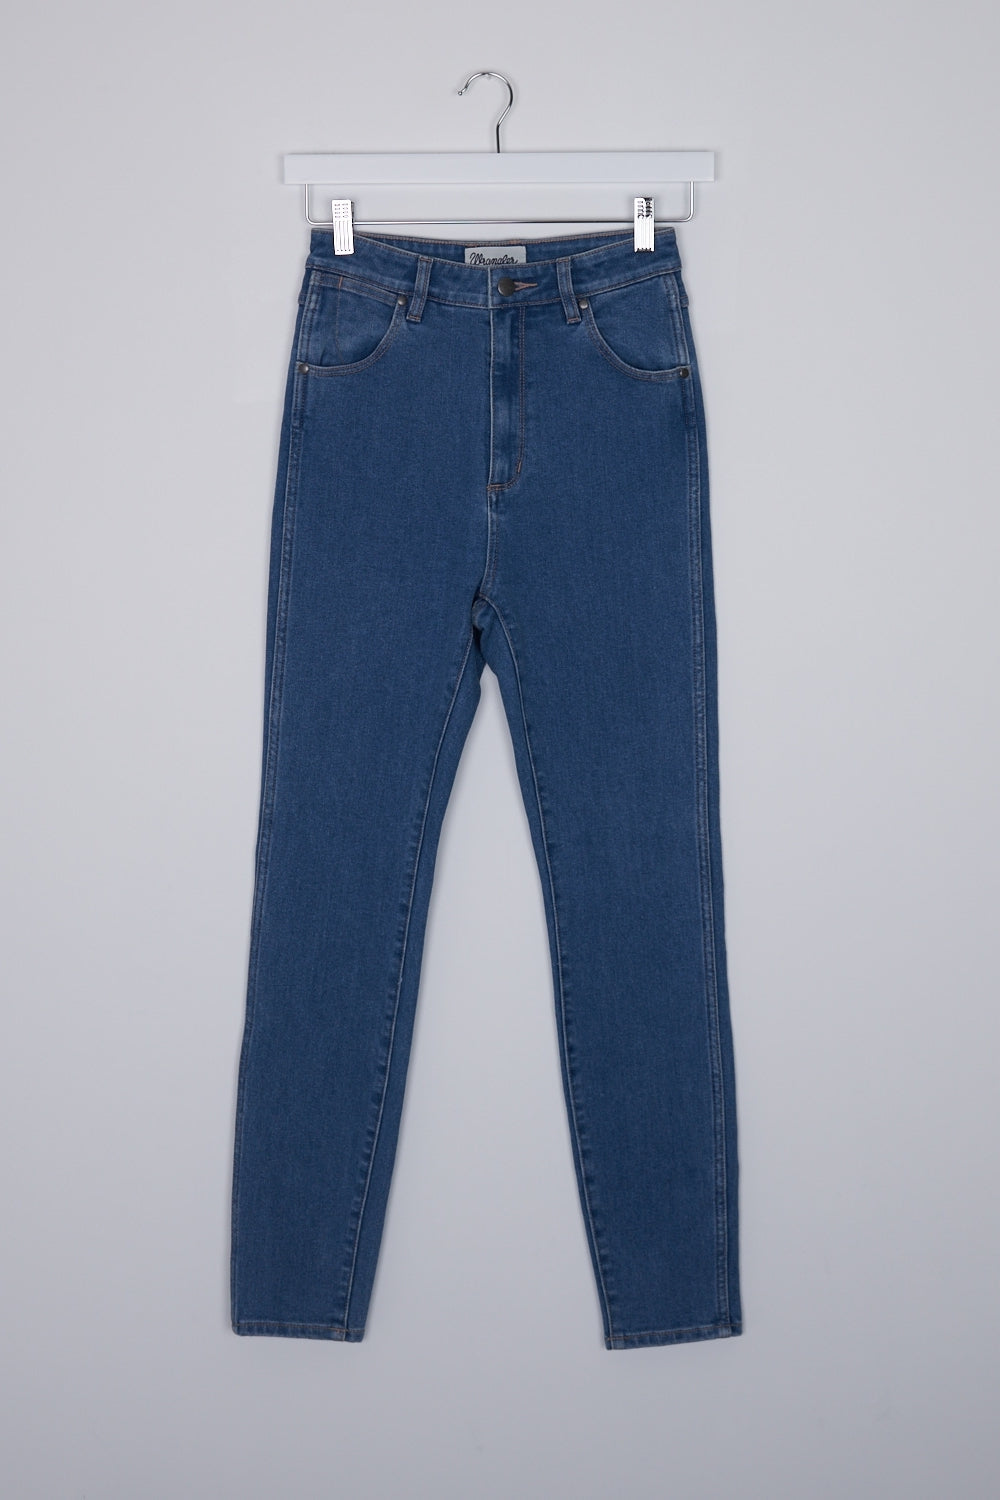 Wrangler Blue Hi Pins Jeans 8